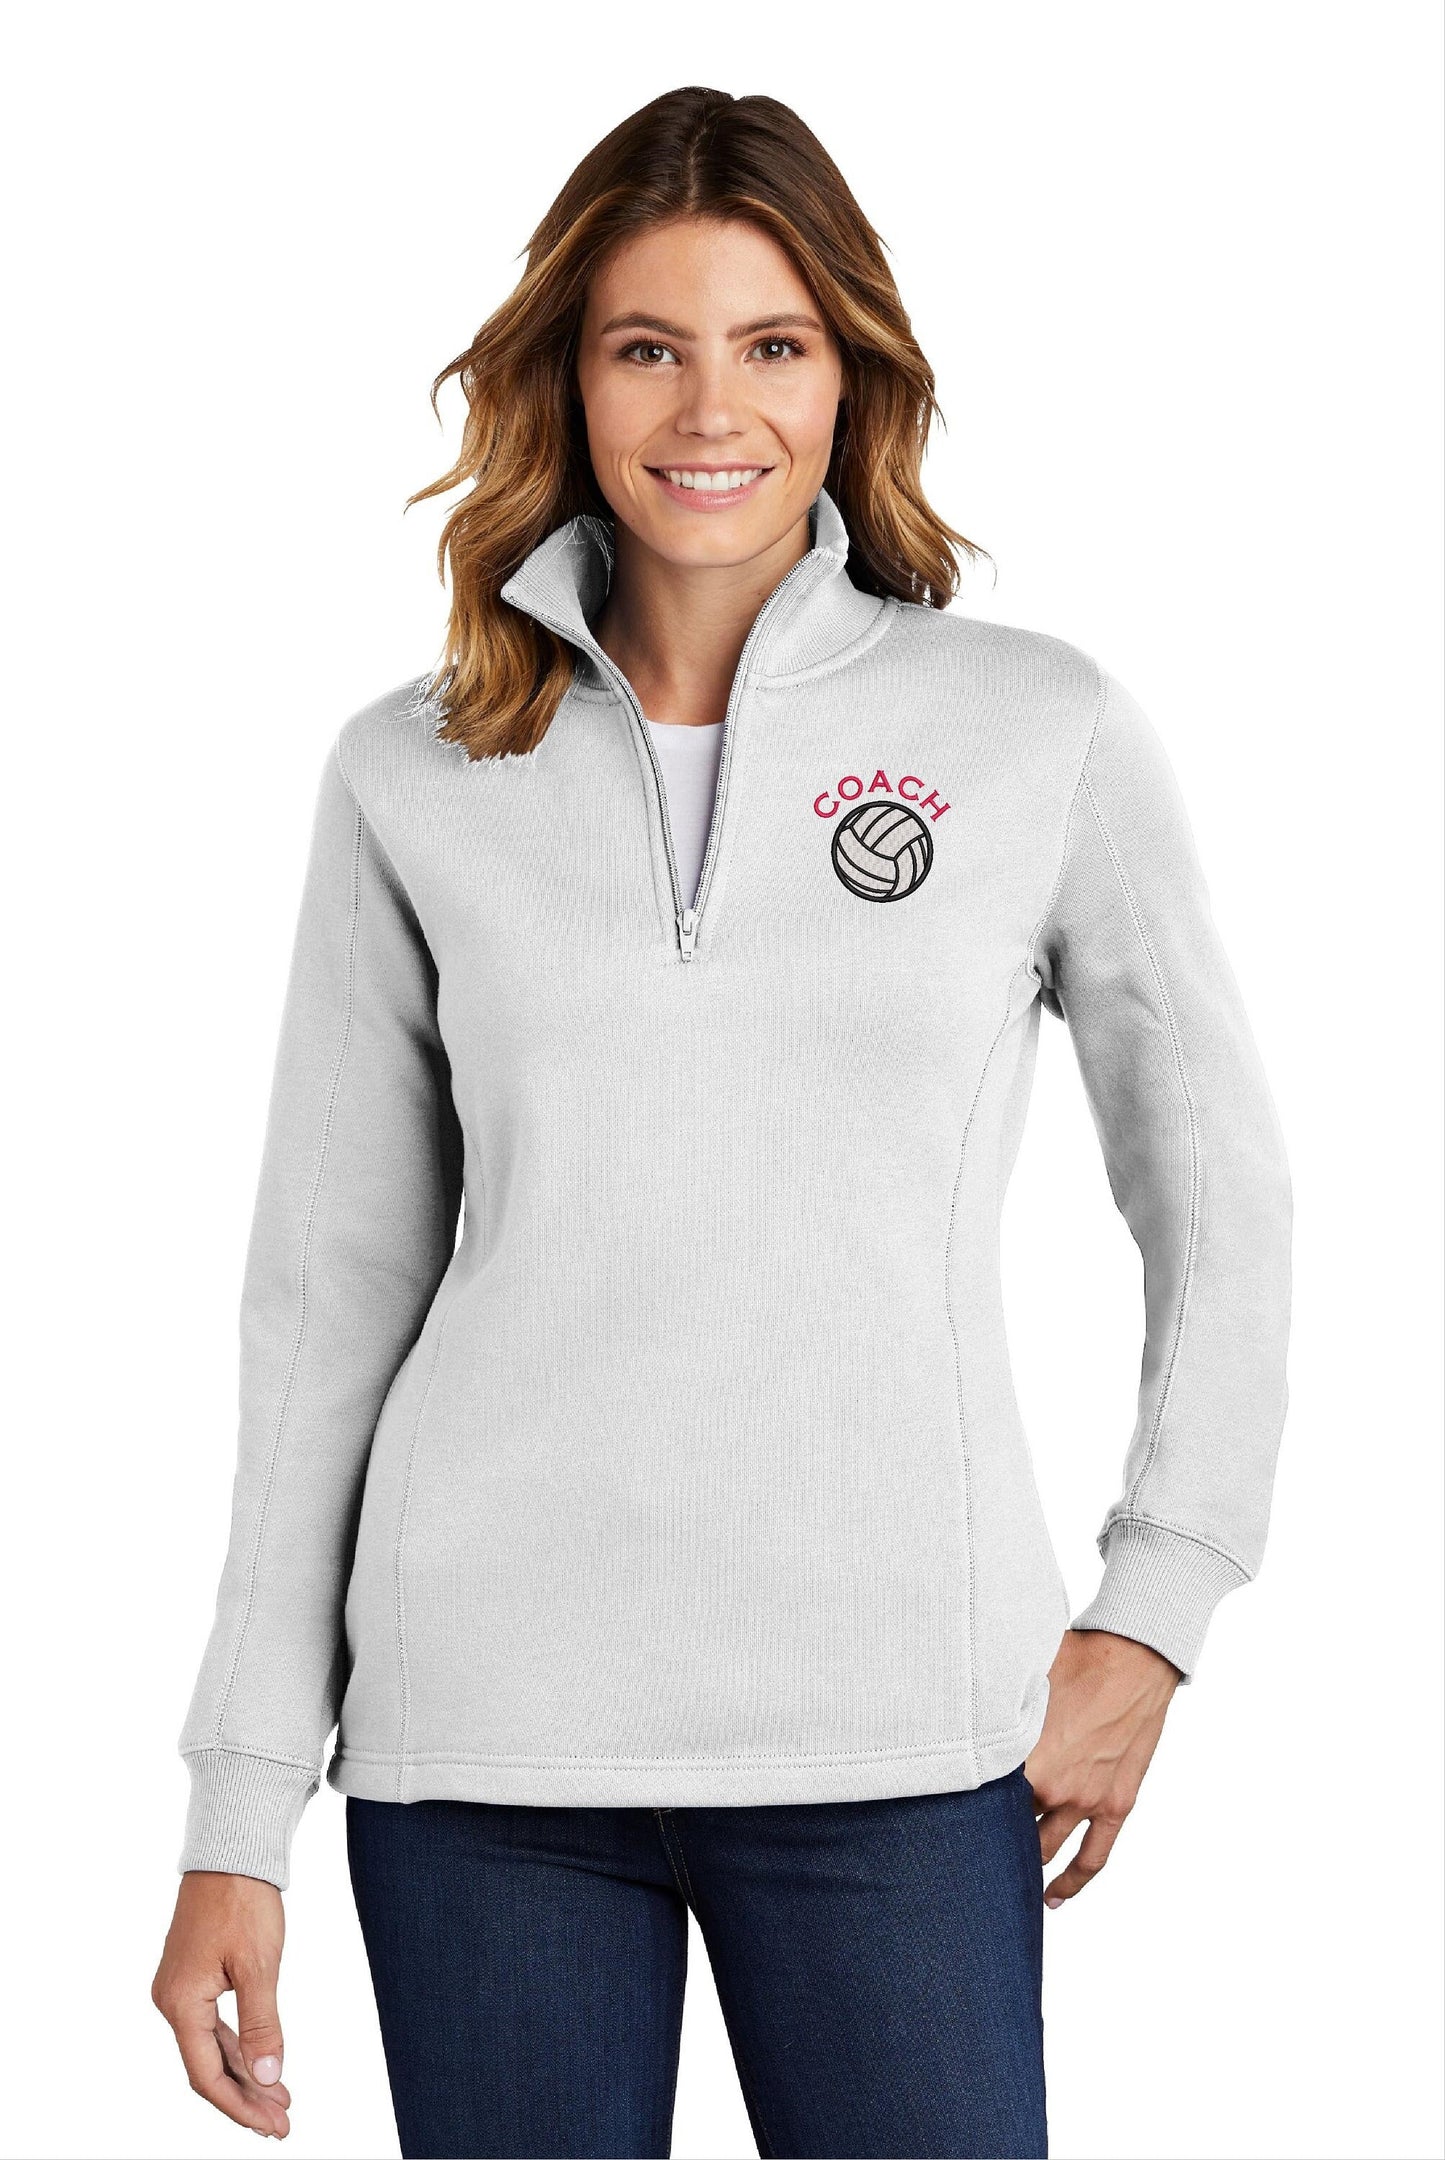 Personalized Ladies Volleyball Quarter Zip Sweatshirt